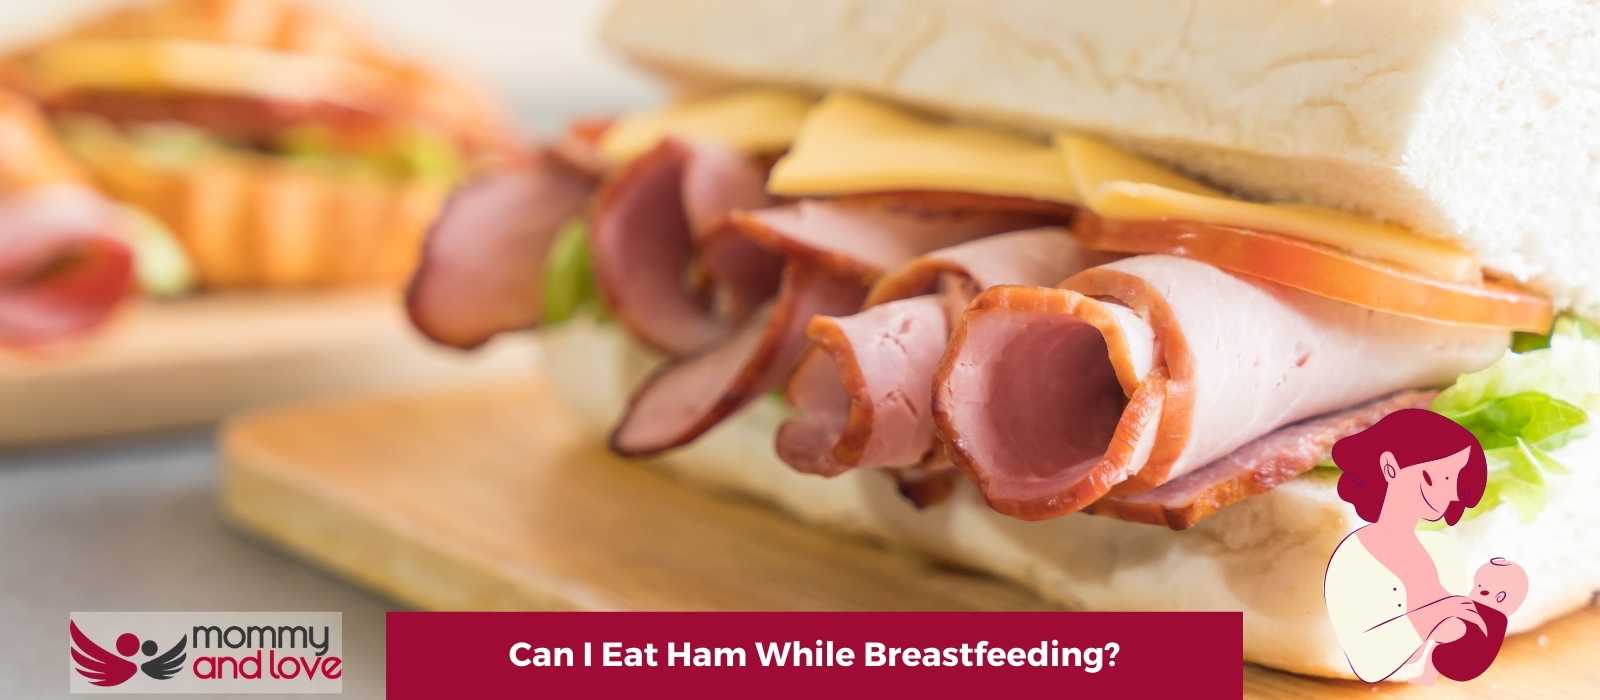 Can I Eat Ham While Breastfeeding?